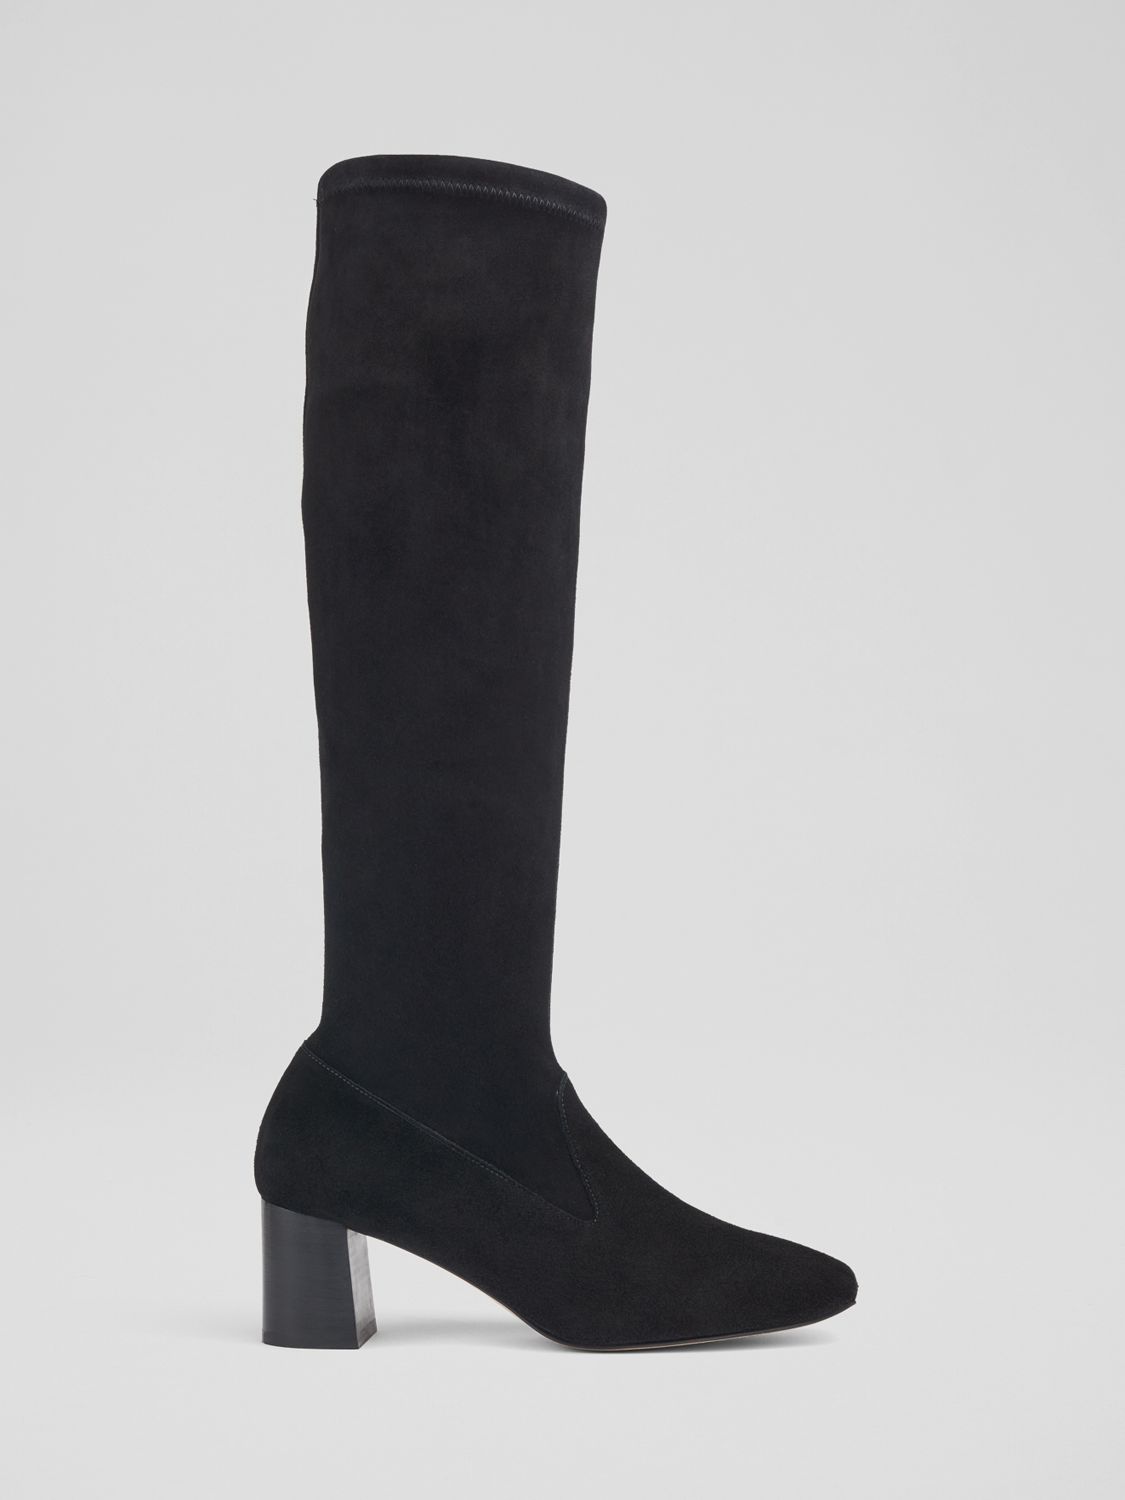 L.K.Bennett Davina Suede Knee High Sock Boots, Black, 2